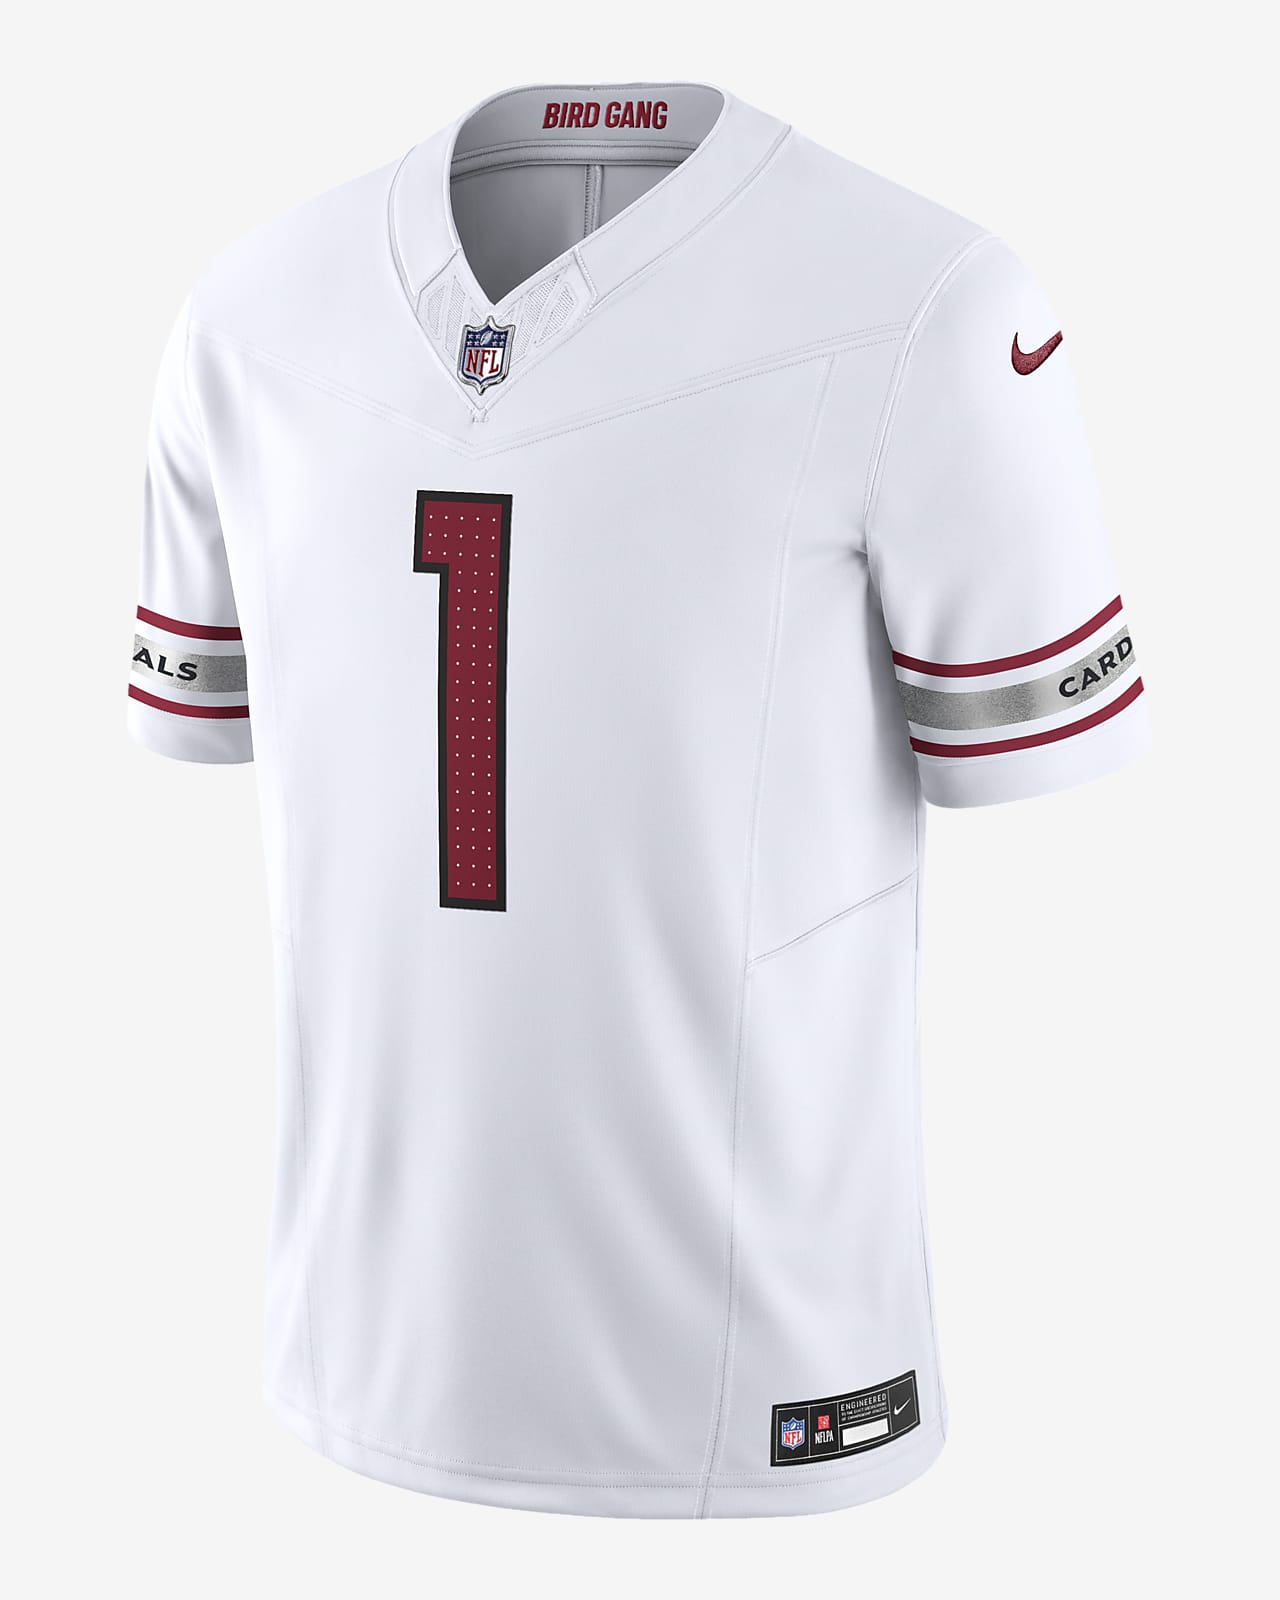 Kyler Murray Arizona Cardinals Men's Nike Dri-FIT NFL Limited Football Jersey